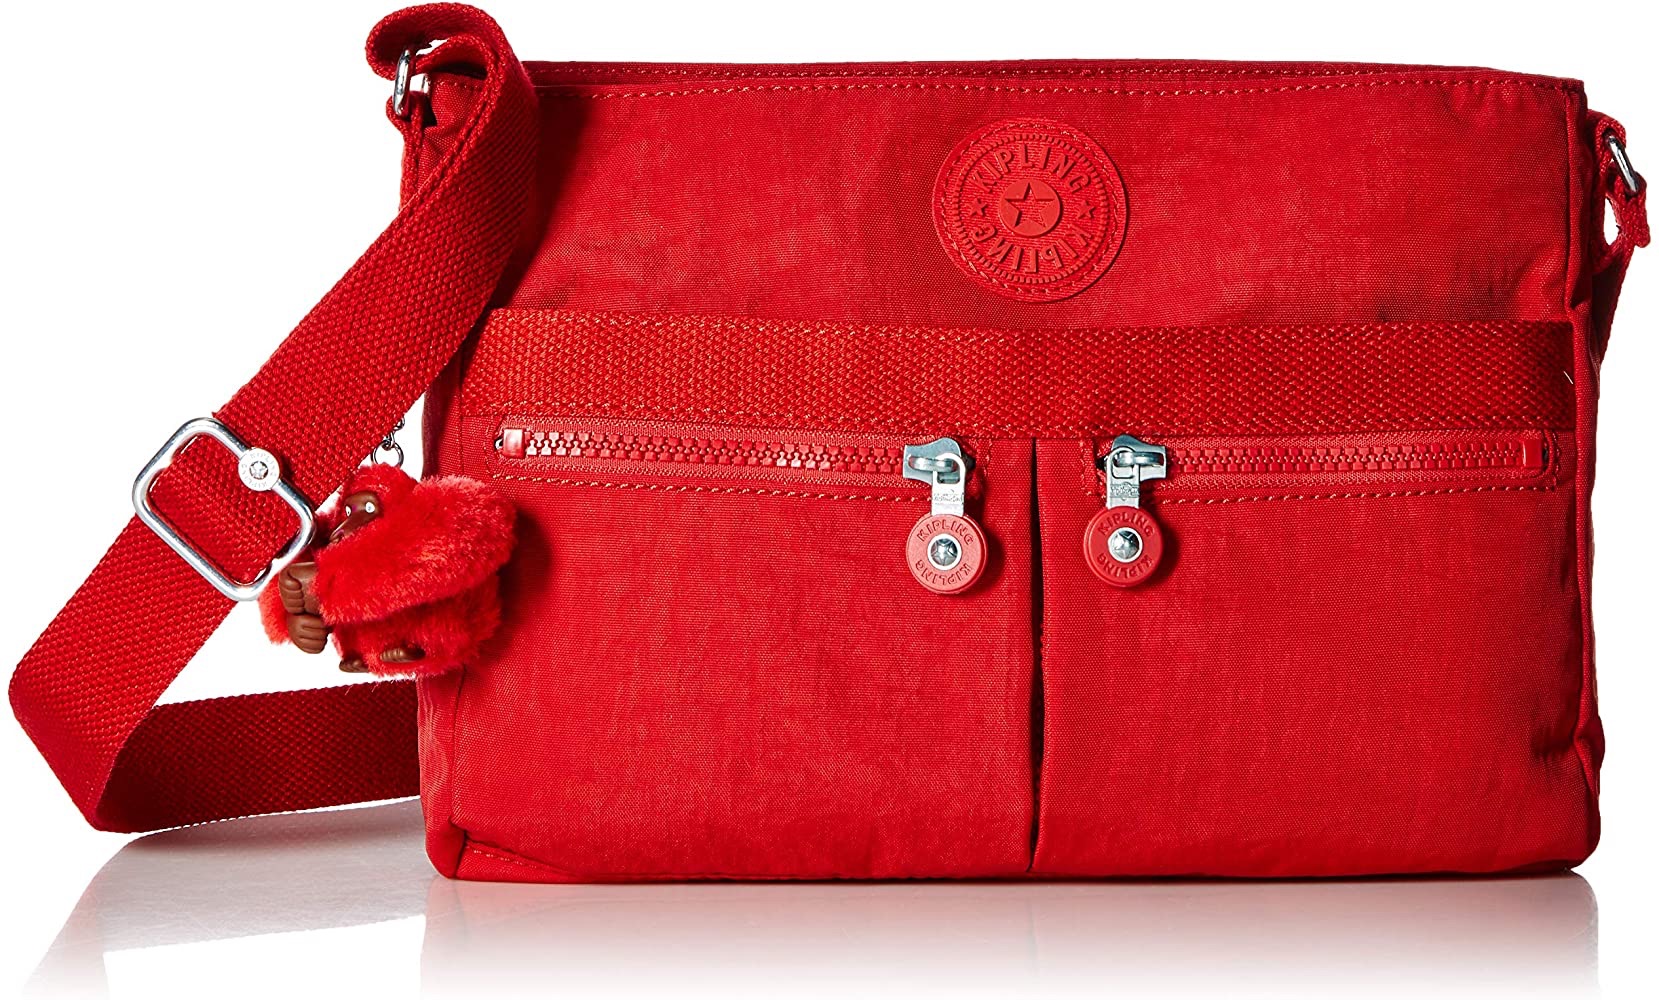 Amazon現有Kipling Angie Crossbody Bag紅色特價優惠